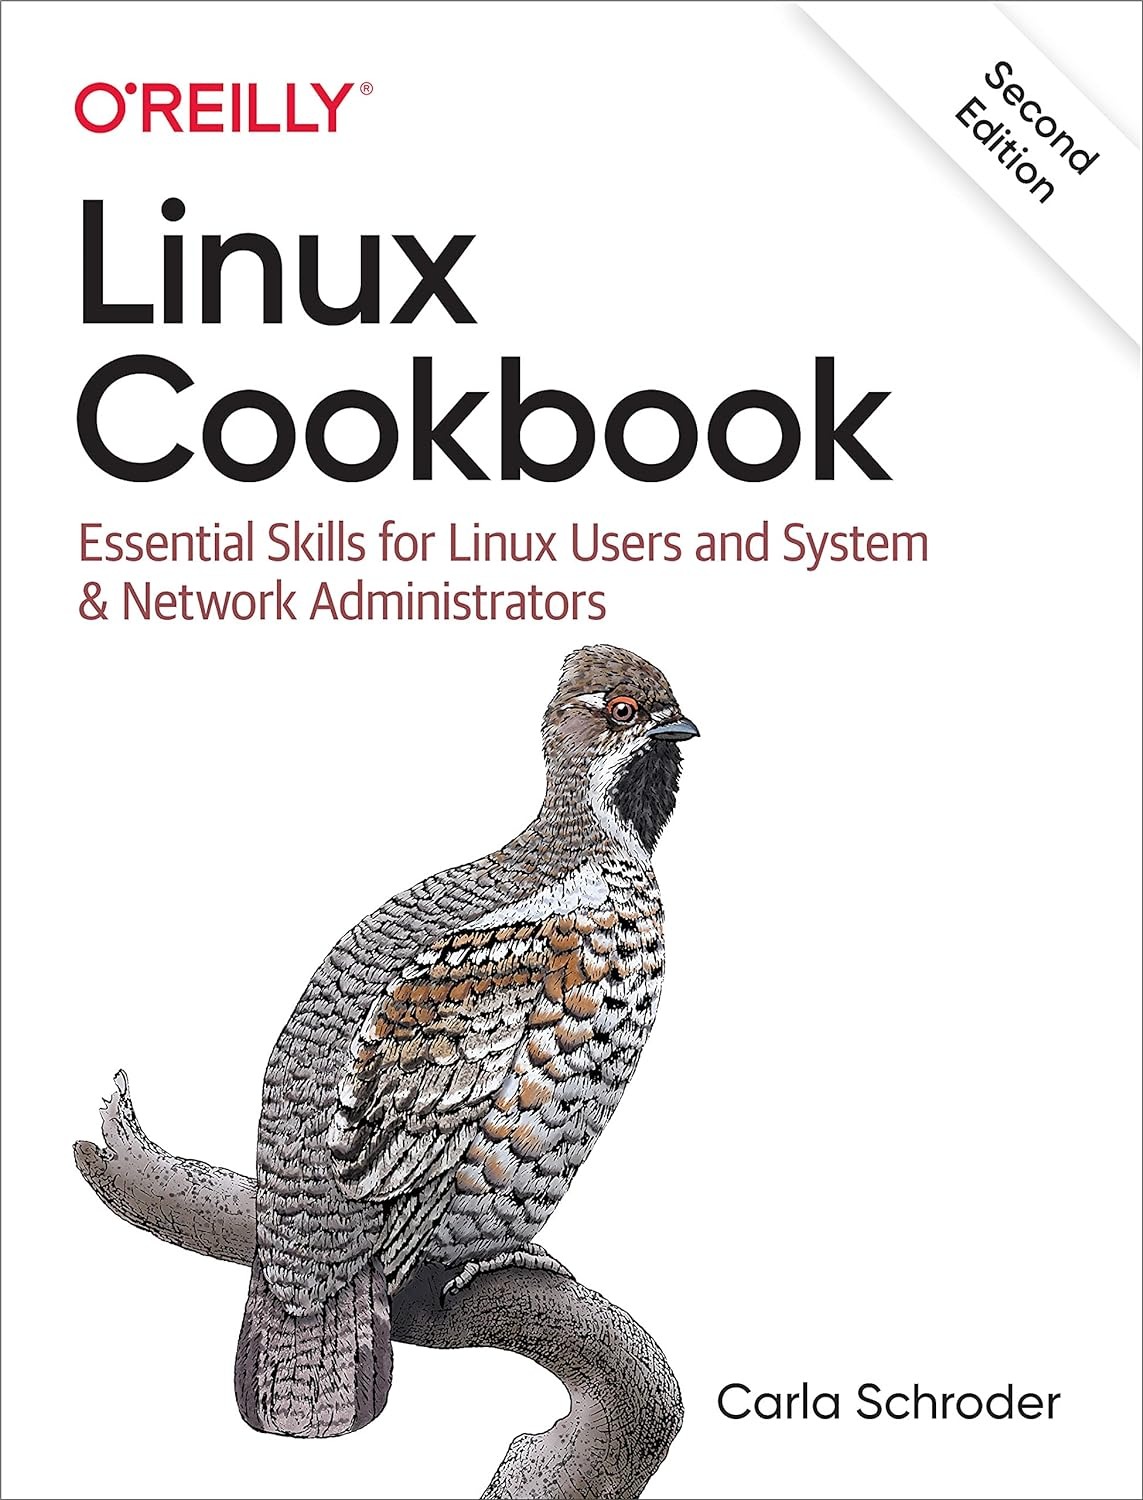 SCHRODER, Carla: Linux Cookbook. Sebastopol: O'Reilly Media, 2021. ISBN: 9781492087168.